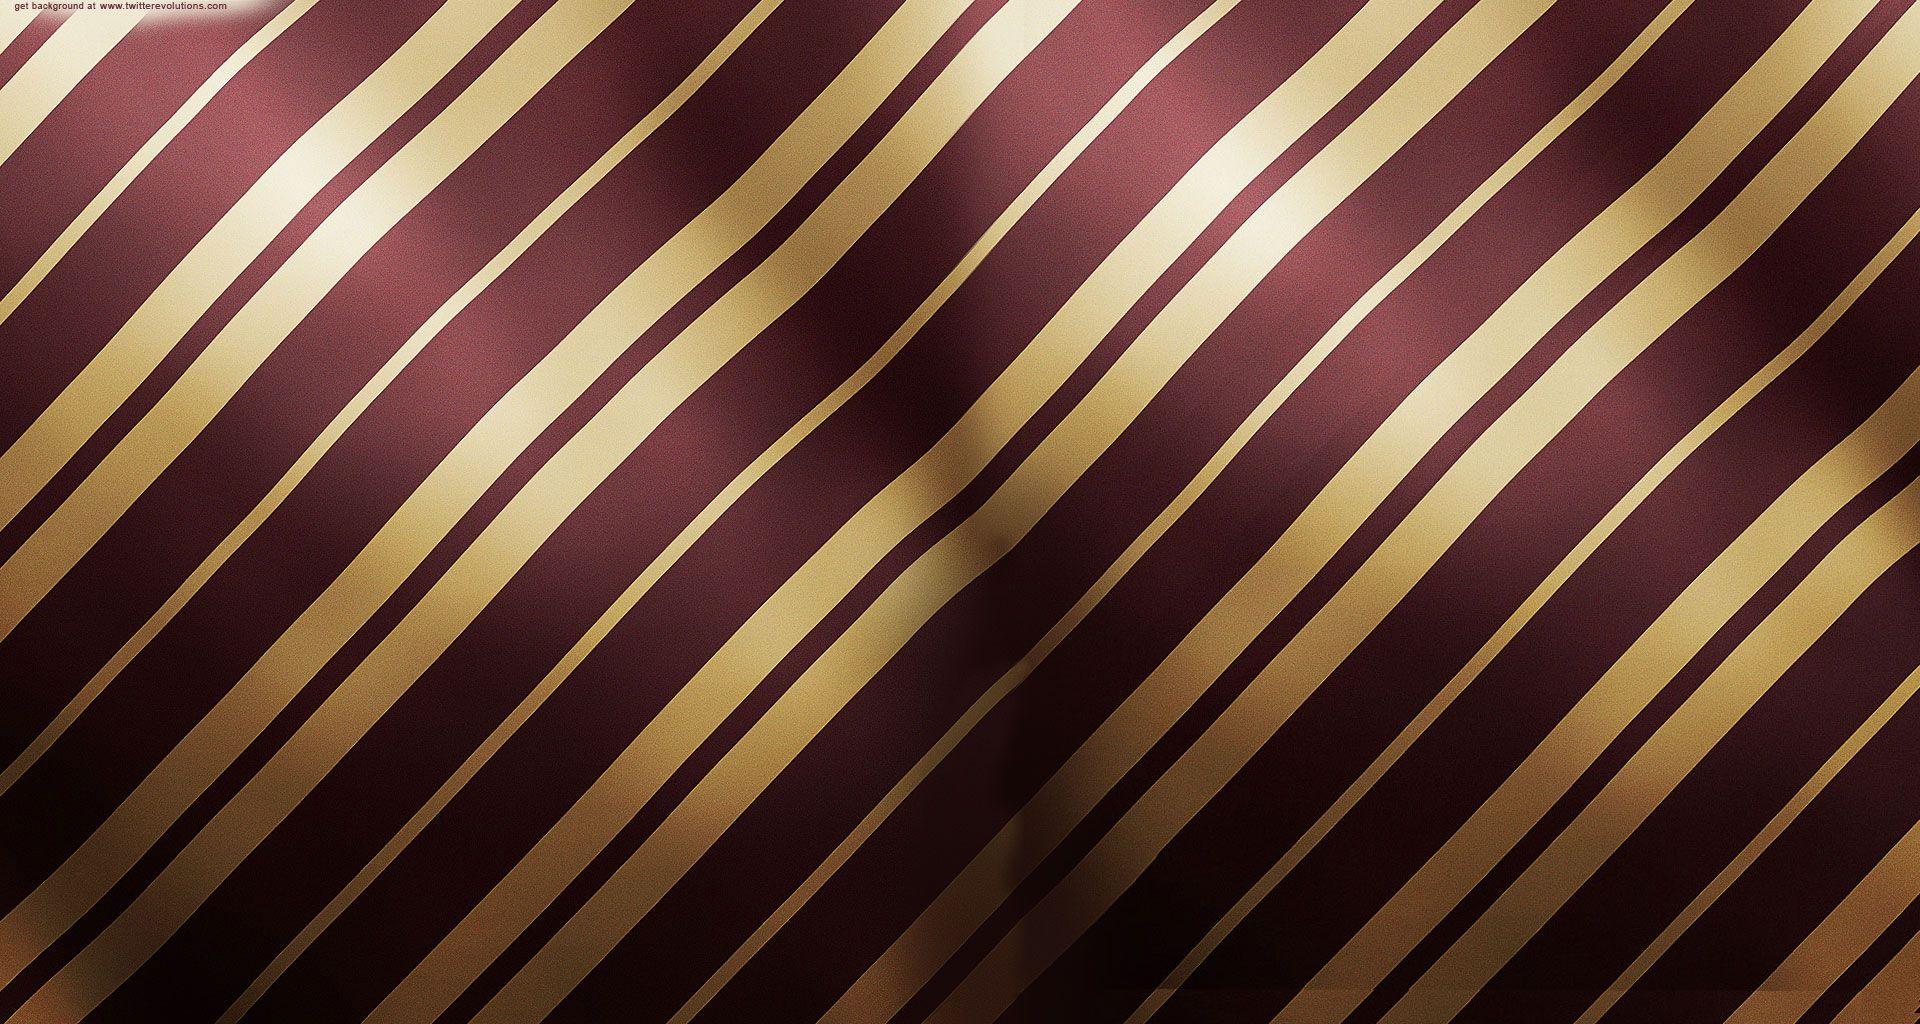 Golden stripes Twitter background. Twitter background